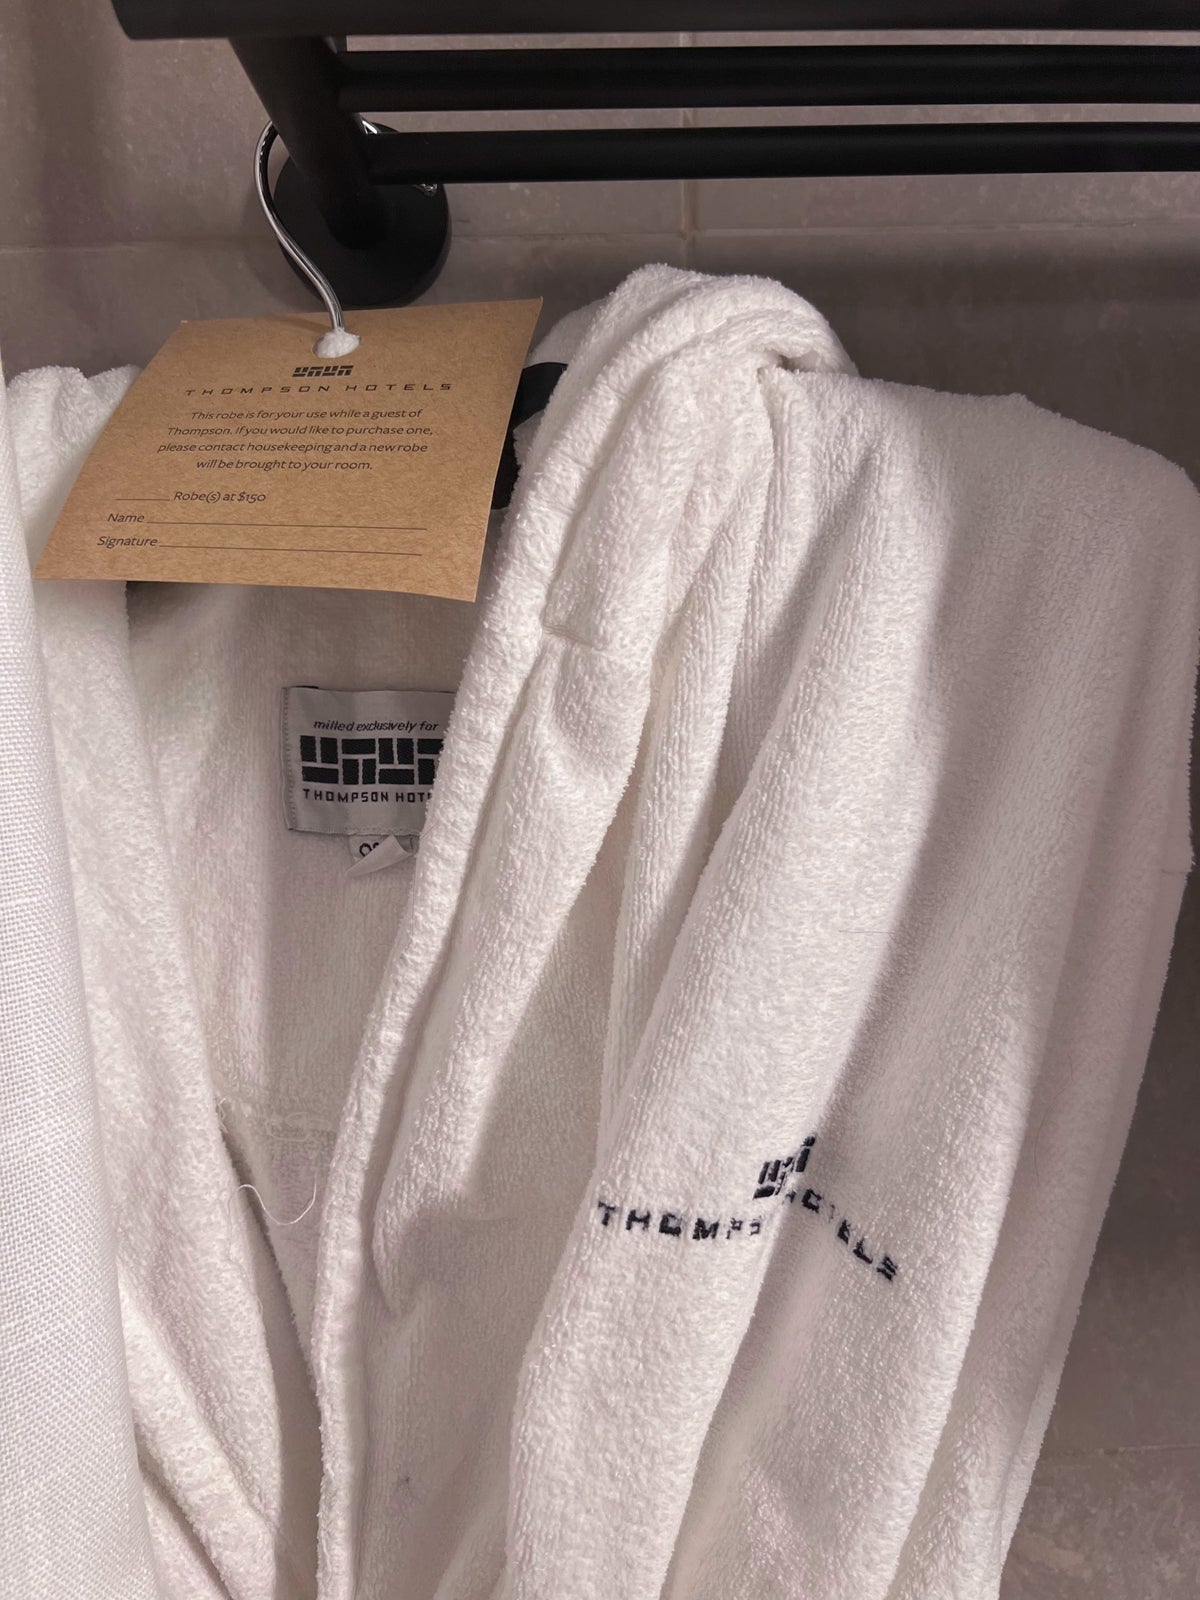 Thompson Hotels robe